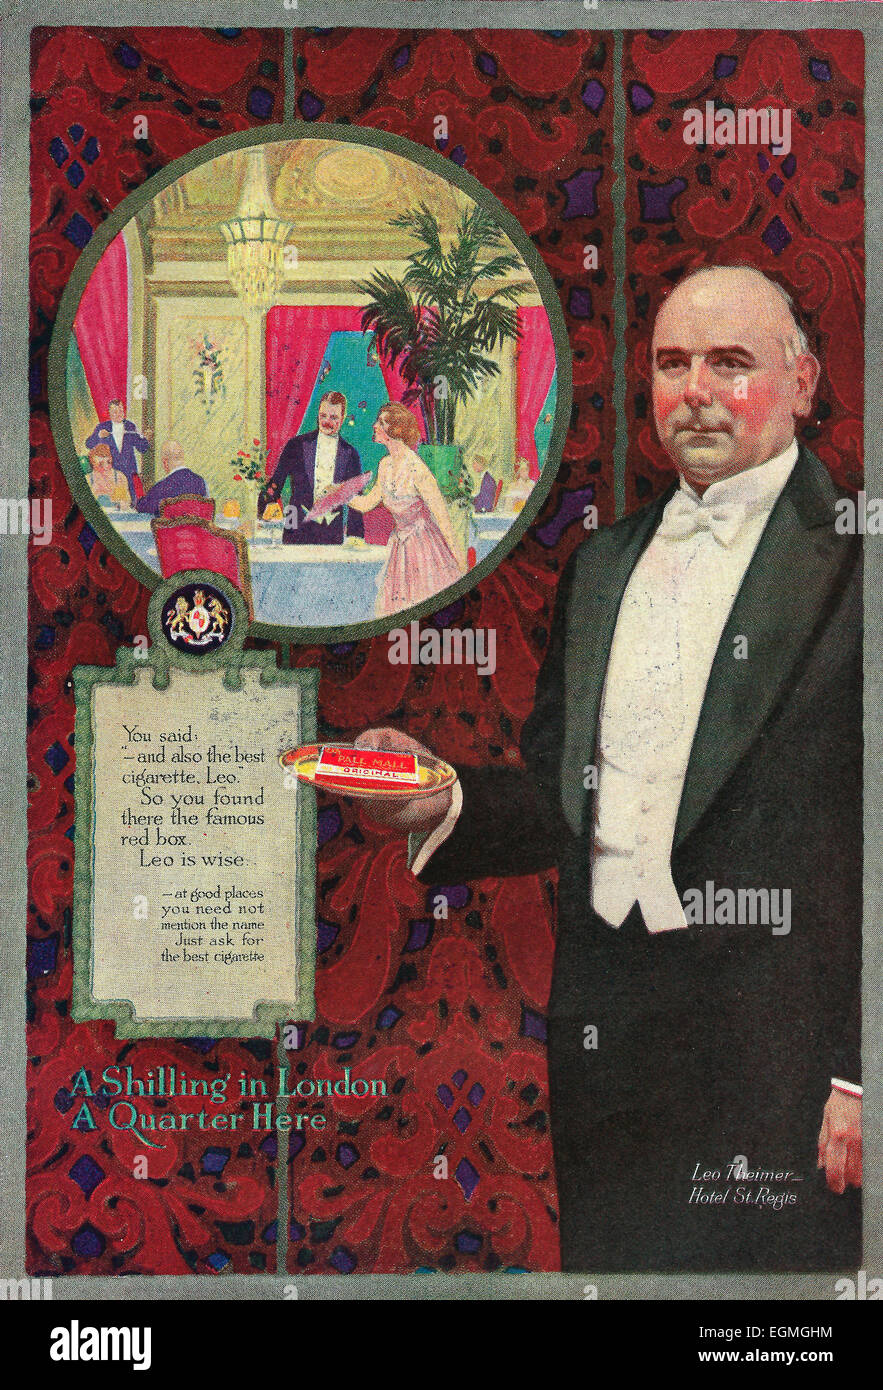 Pall Mall Zigaretten Werbung, 1916 Stockfoto